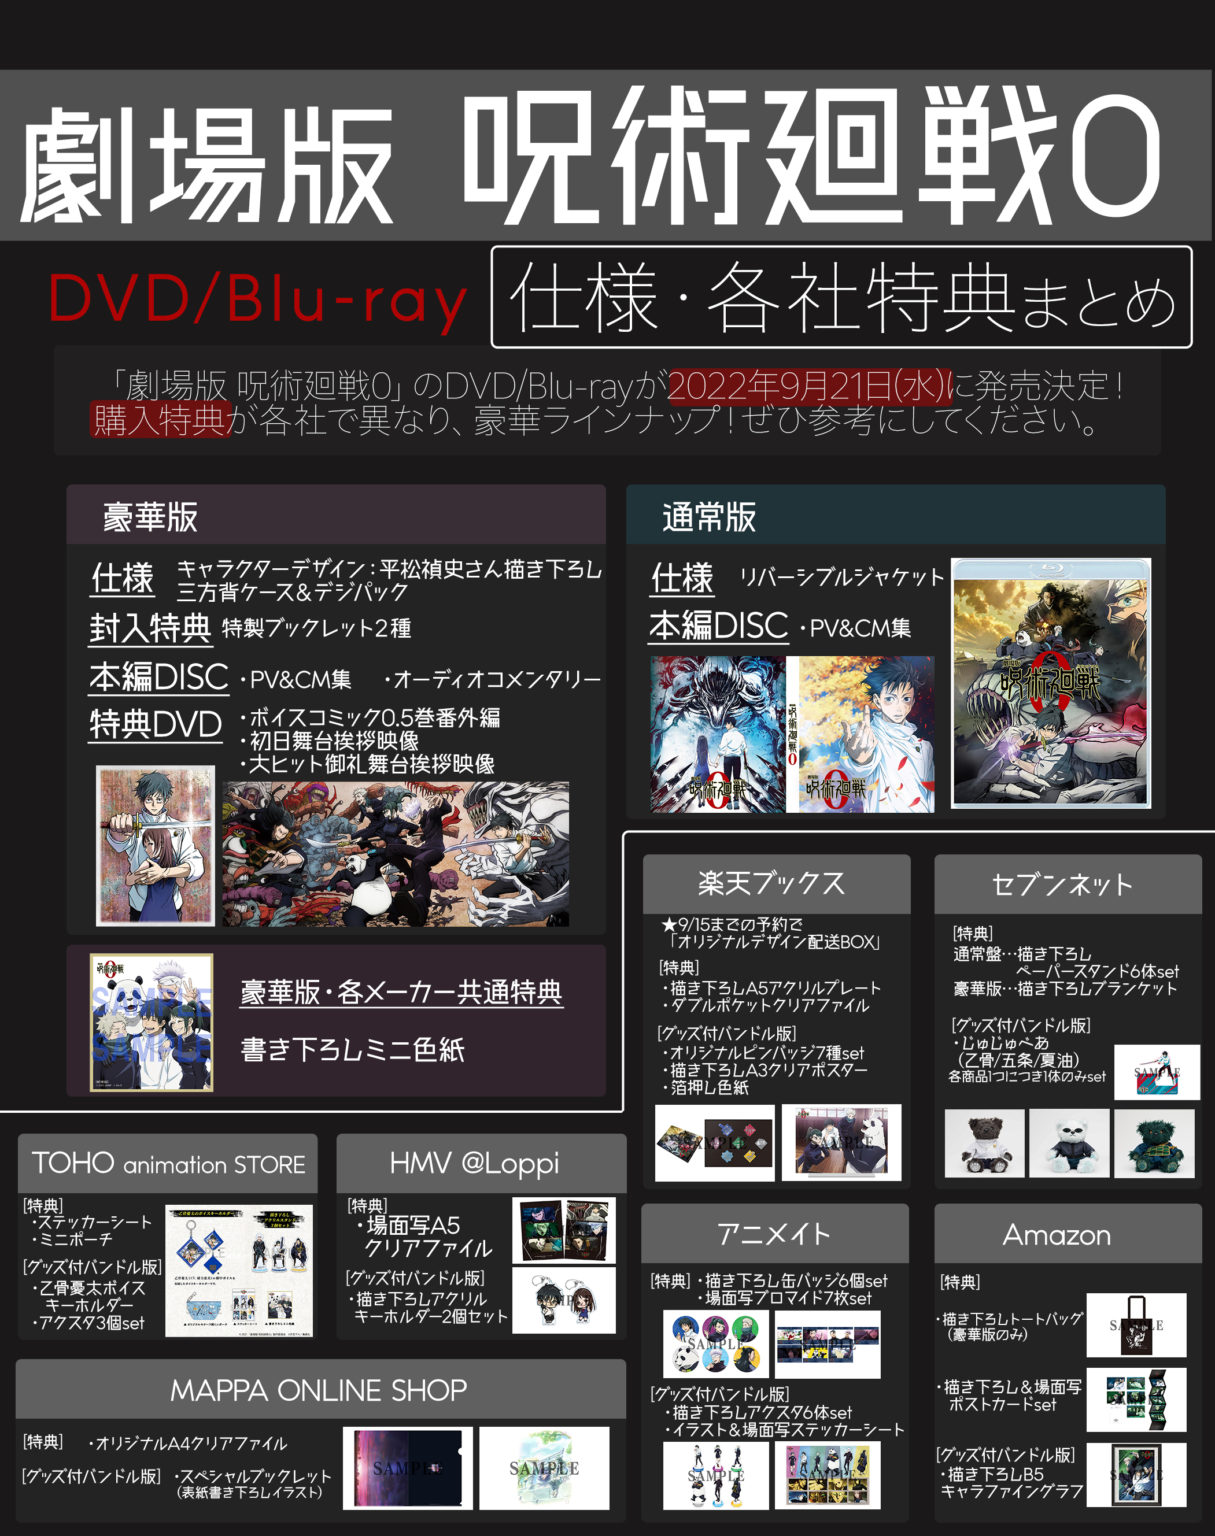 Blu-ray 呪術廻戦 TVシリーズ 1期 初回生産限定版 全8巻セット+